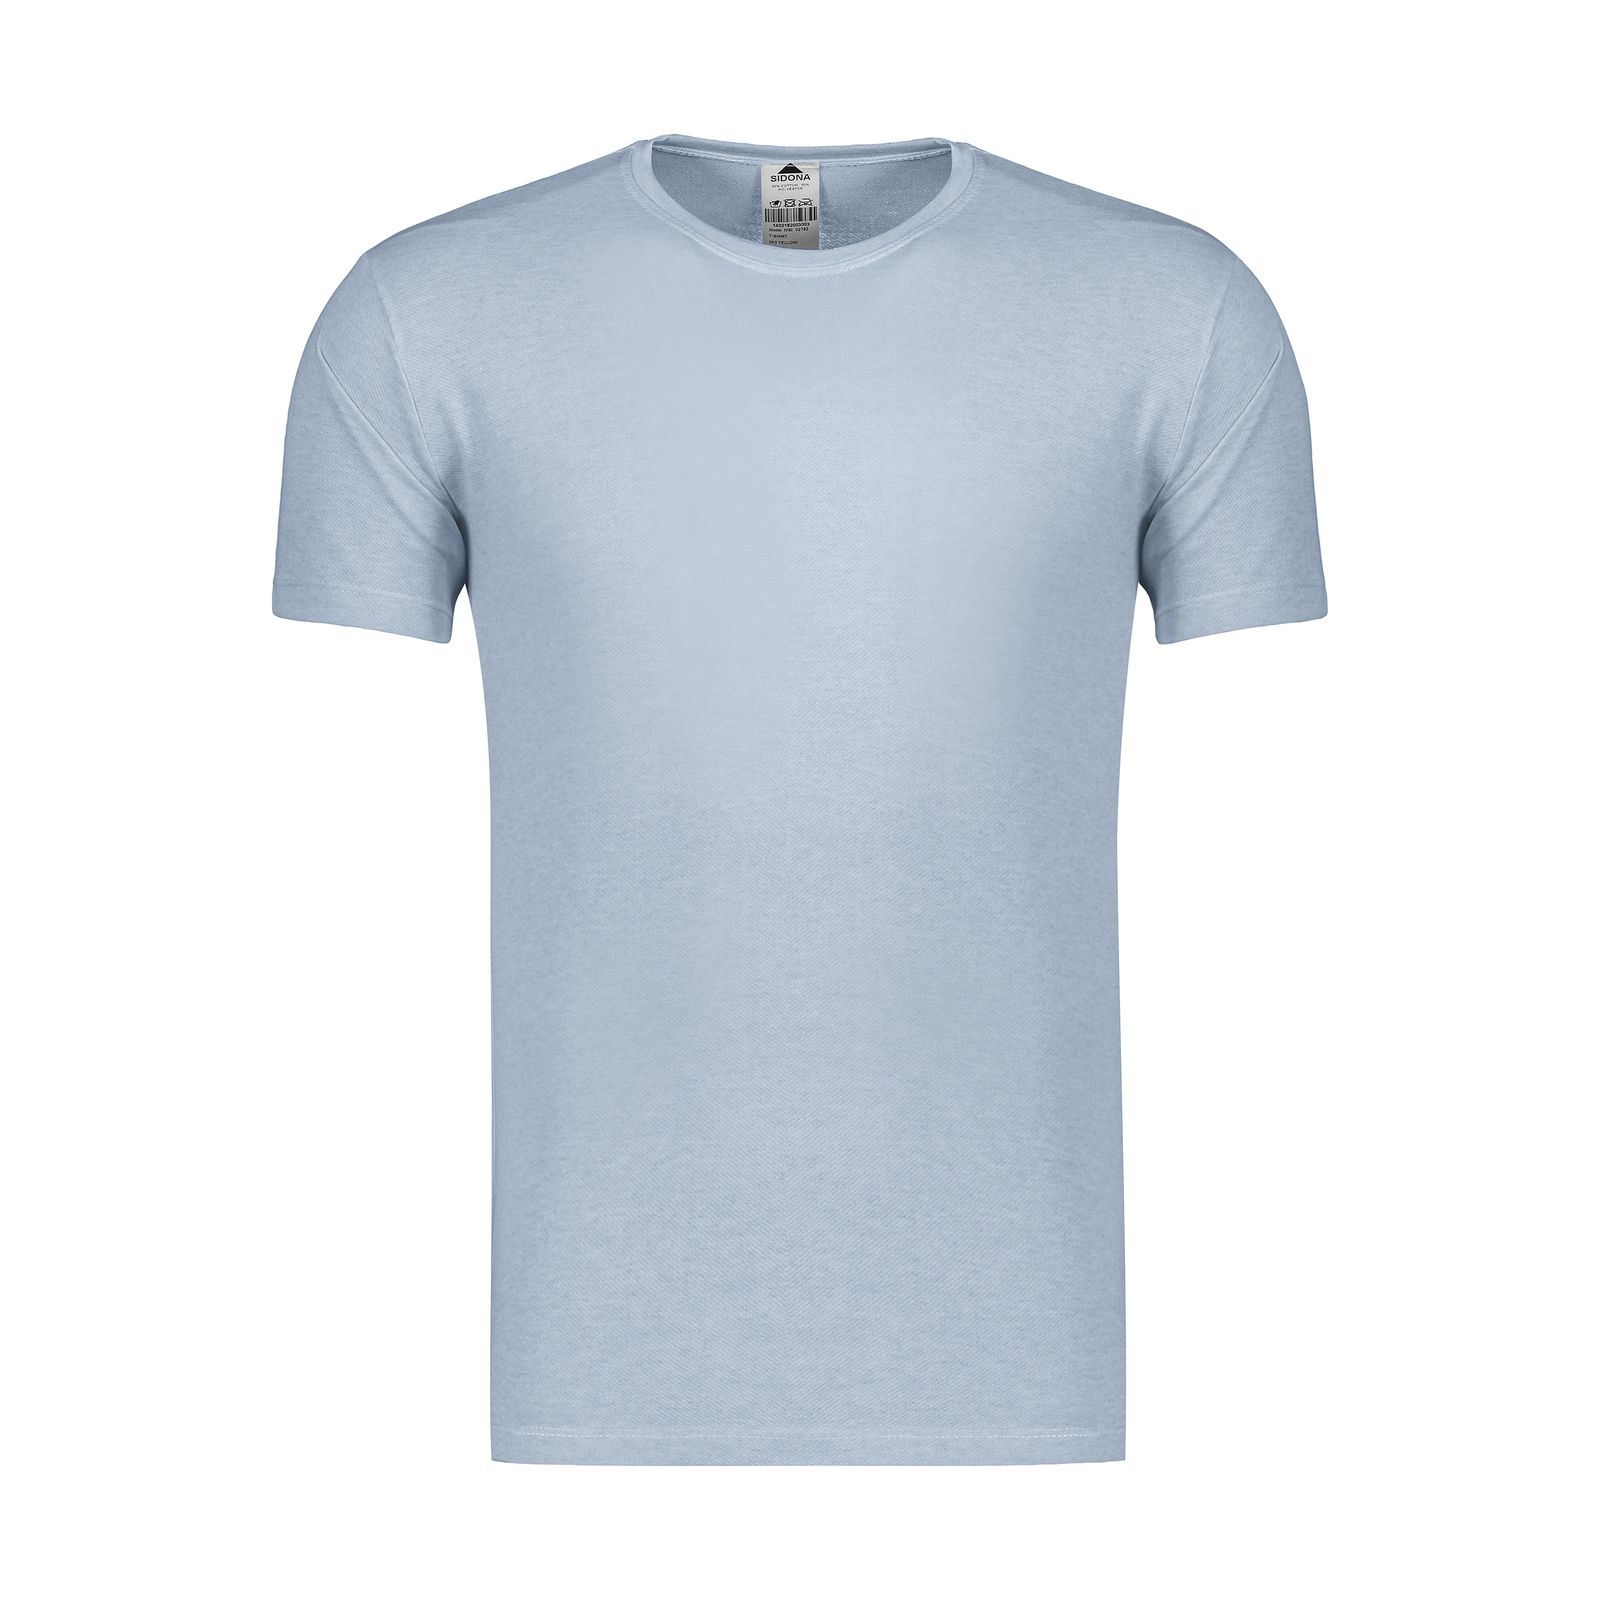 تی شرت مردانه سیدونا مدل MSI02182-016 -  - 1